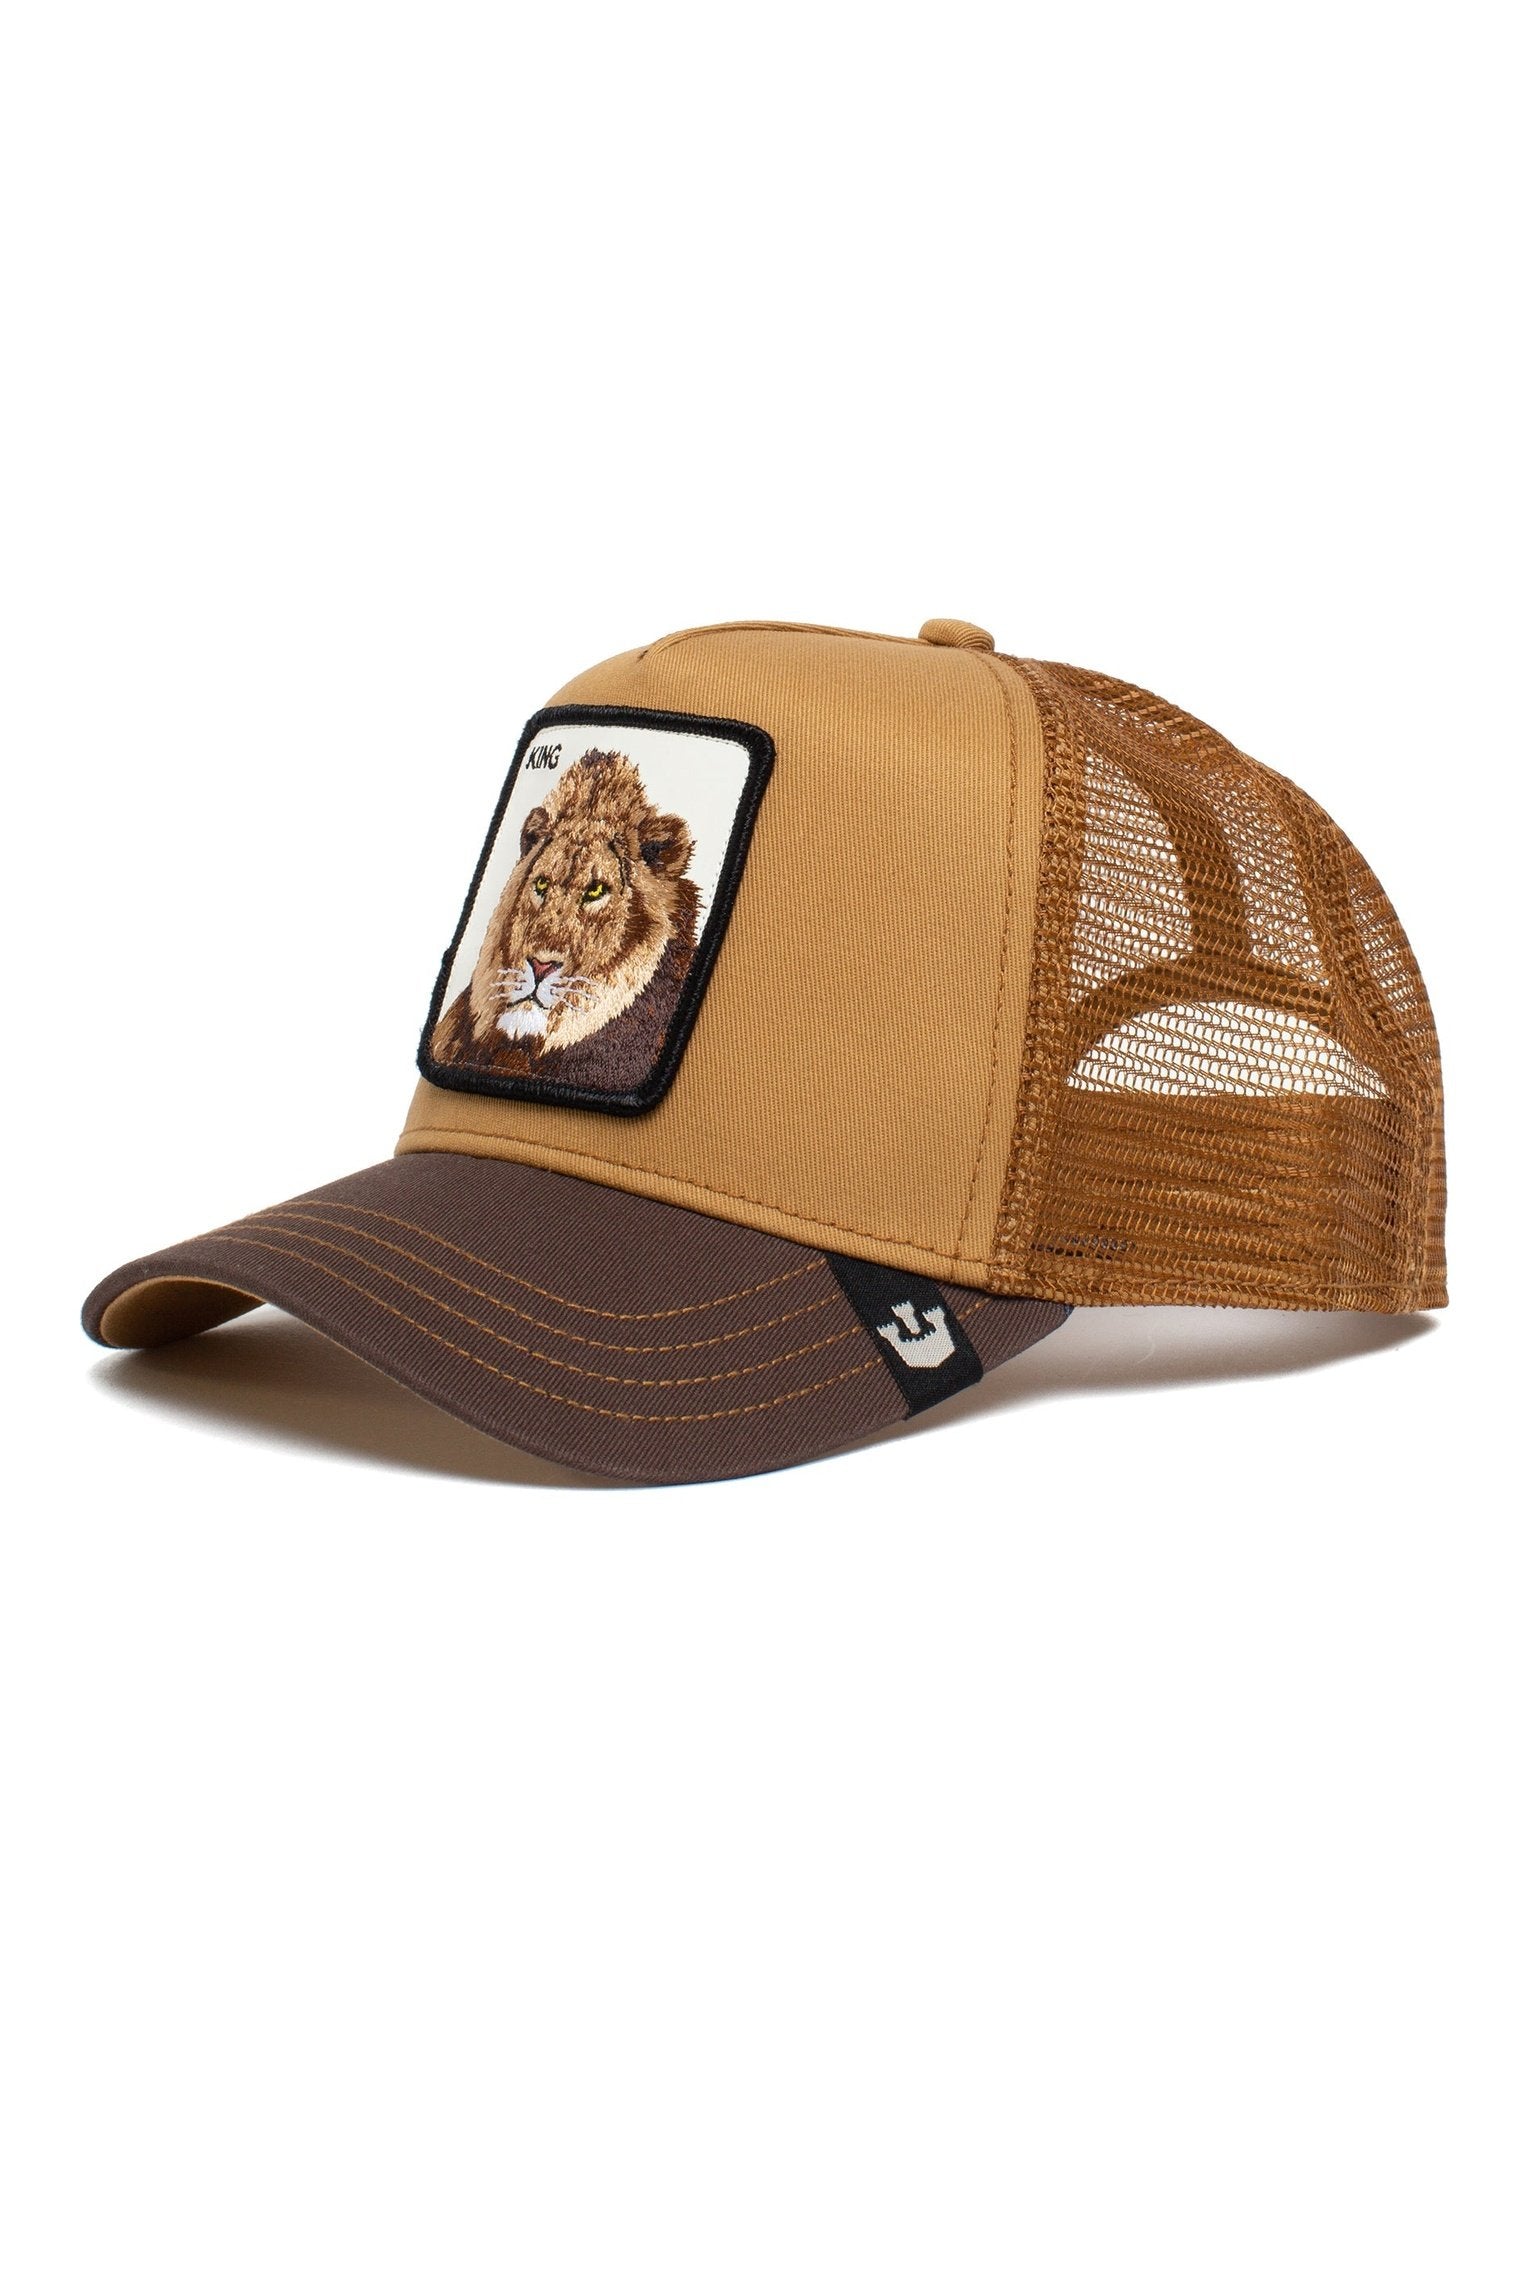 GOORIN - כובע מצחייה THE KING LION בצבע חום - MASHBIR//365